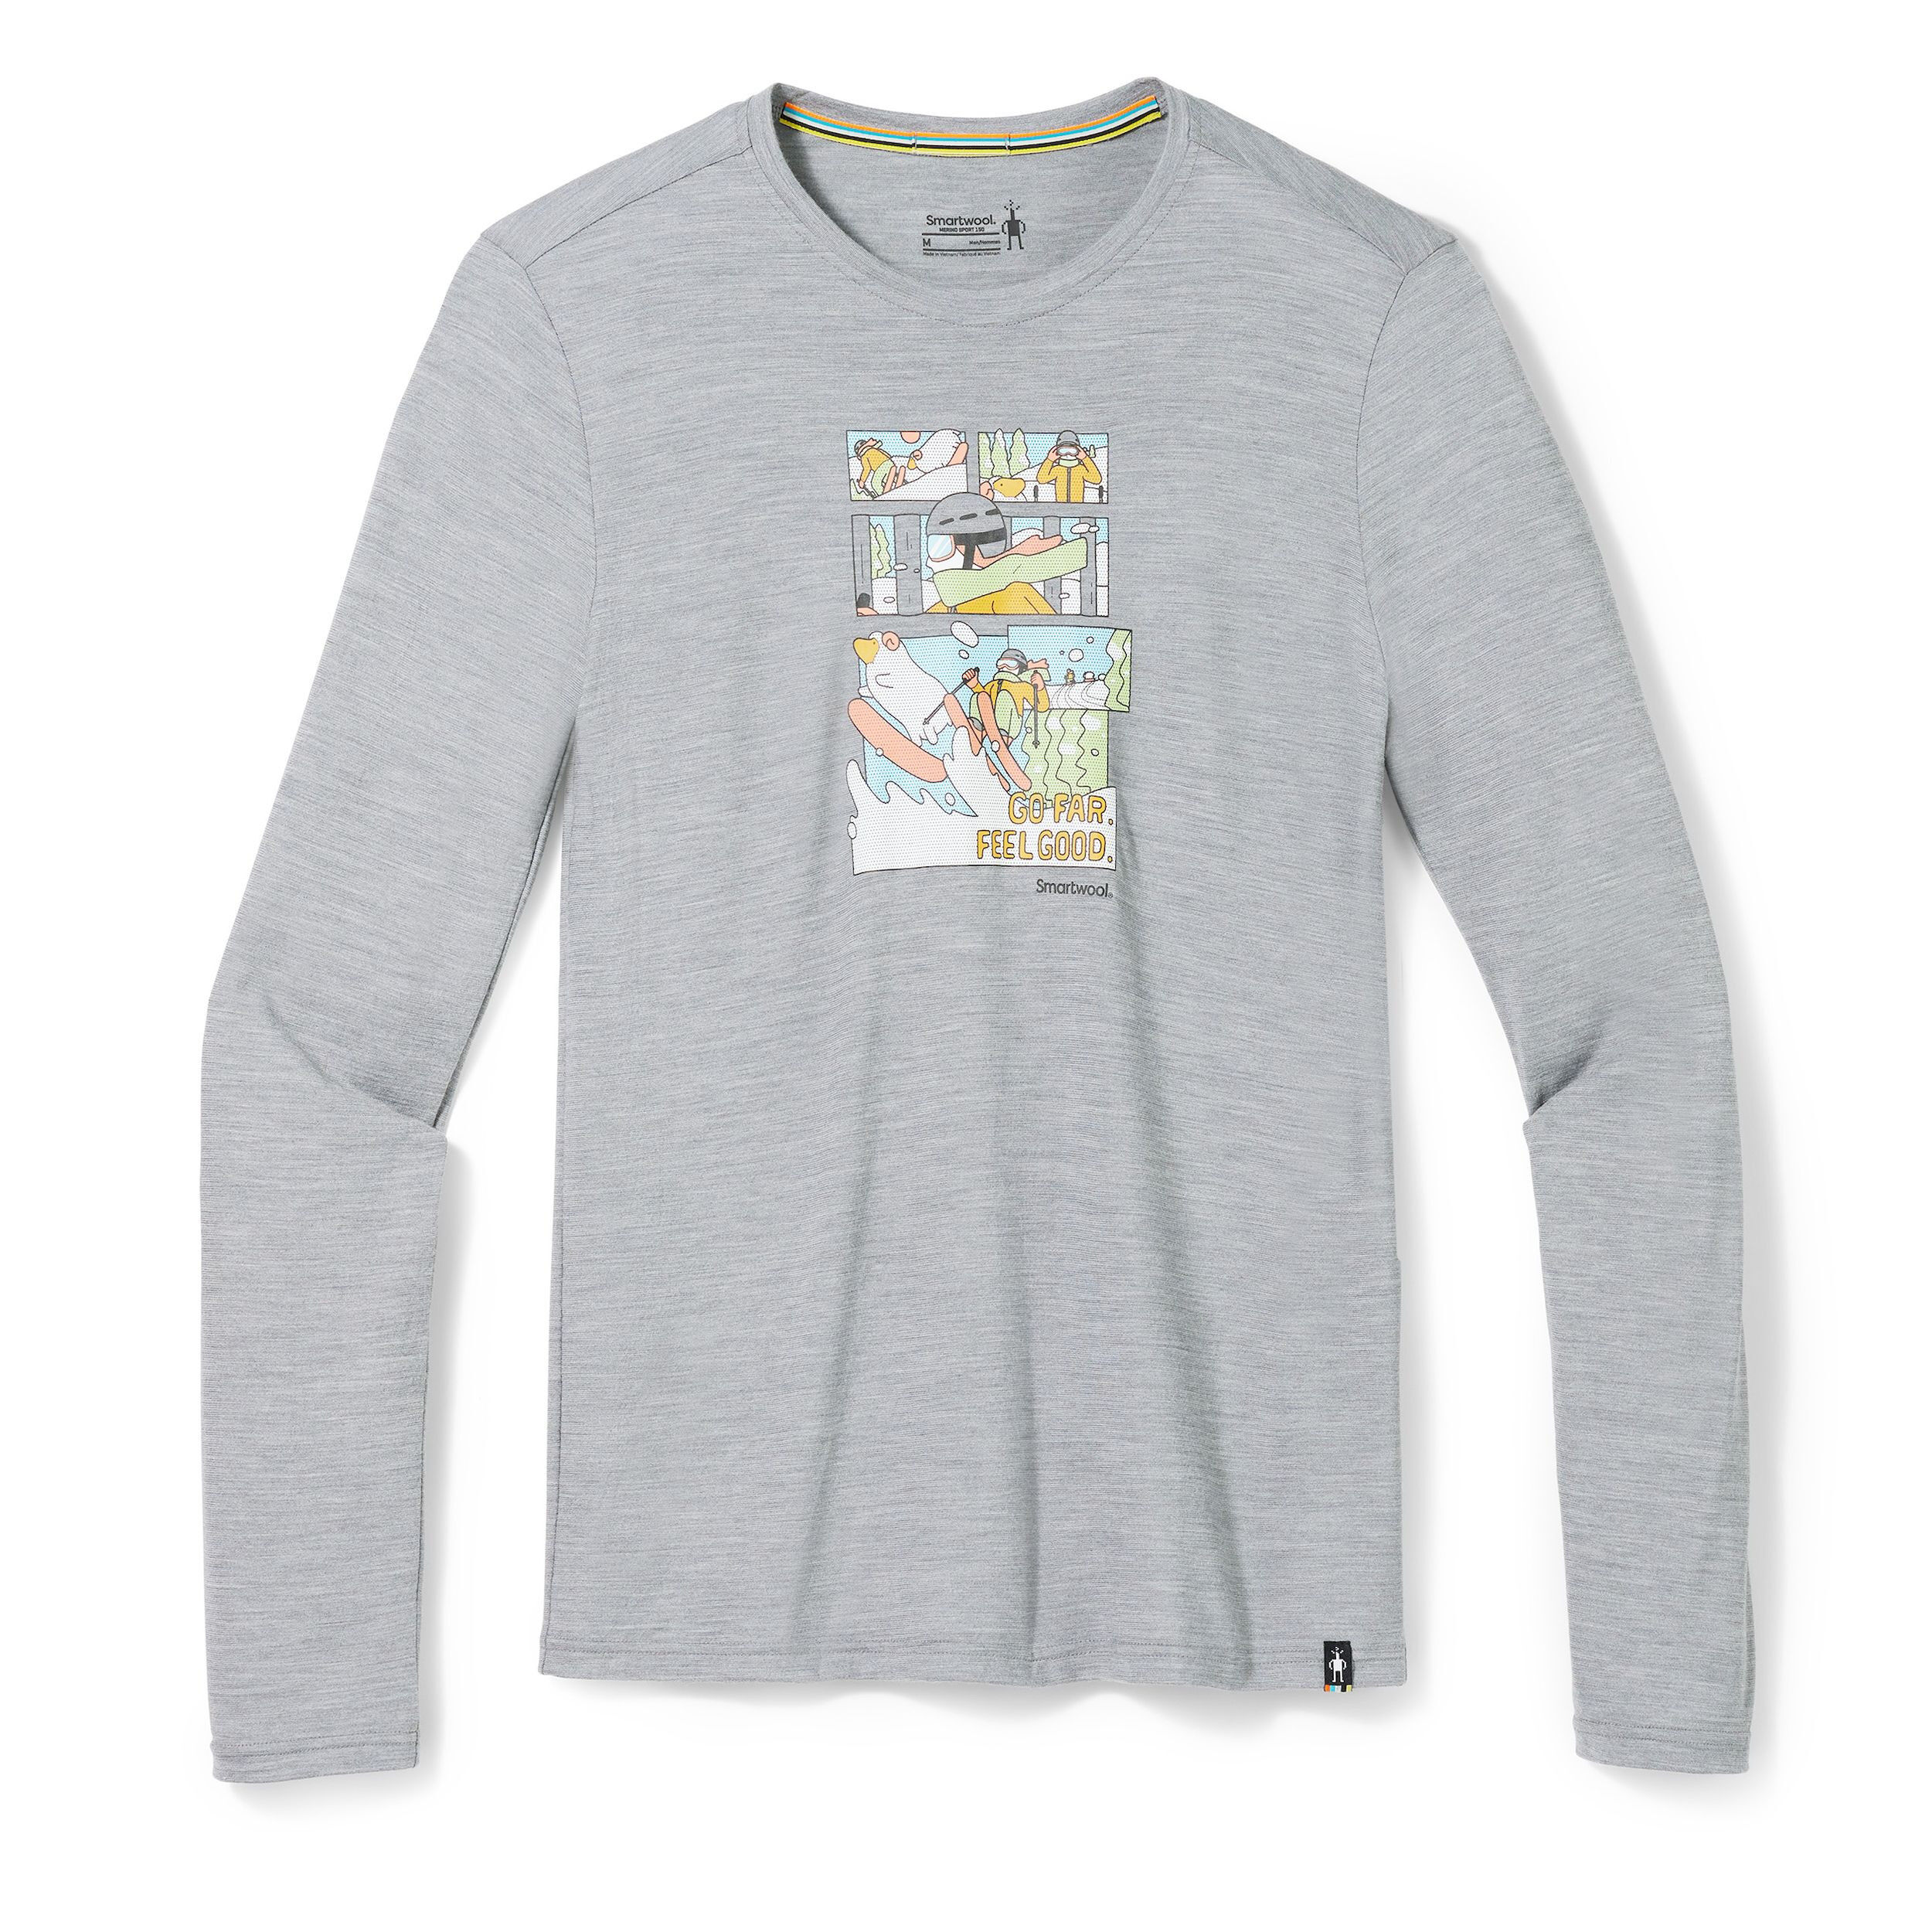 Smartwool Winter Adventure Long Sleeve Graphic Tee Slim Fit - T-shirt - Herrer